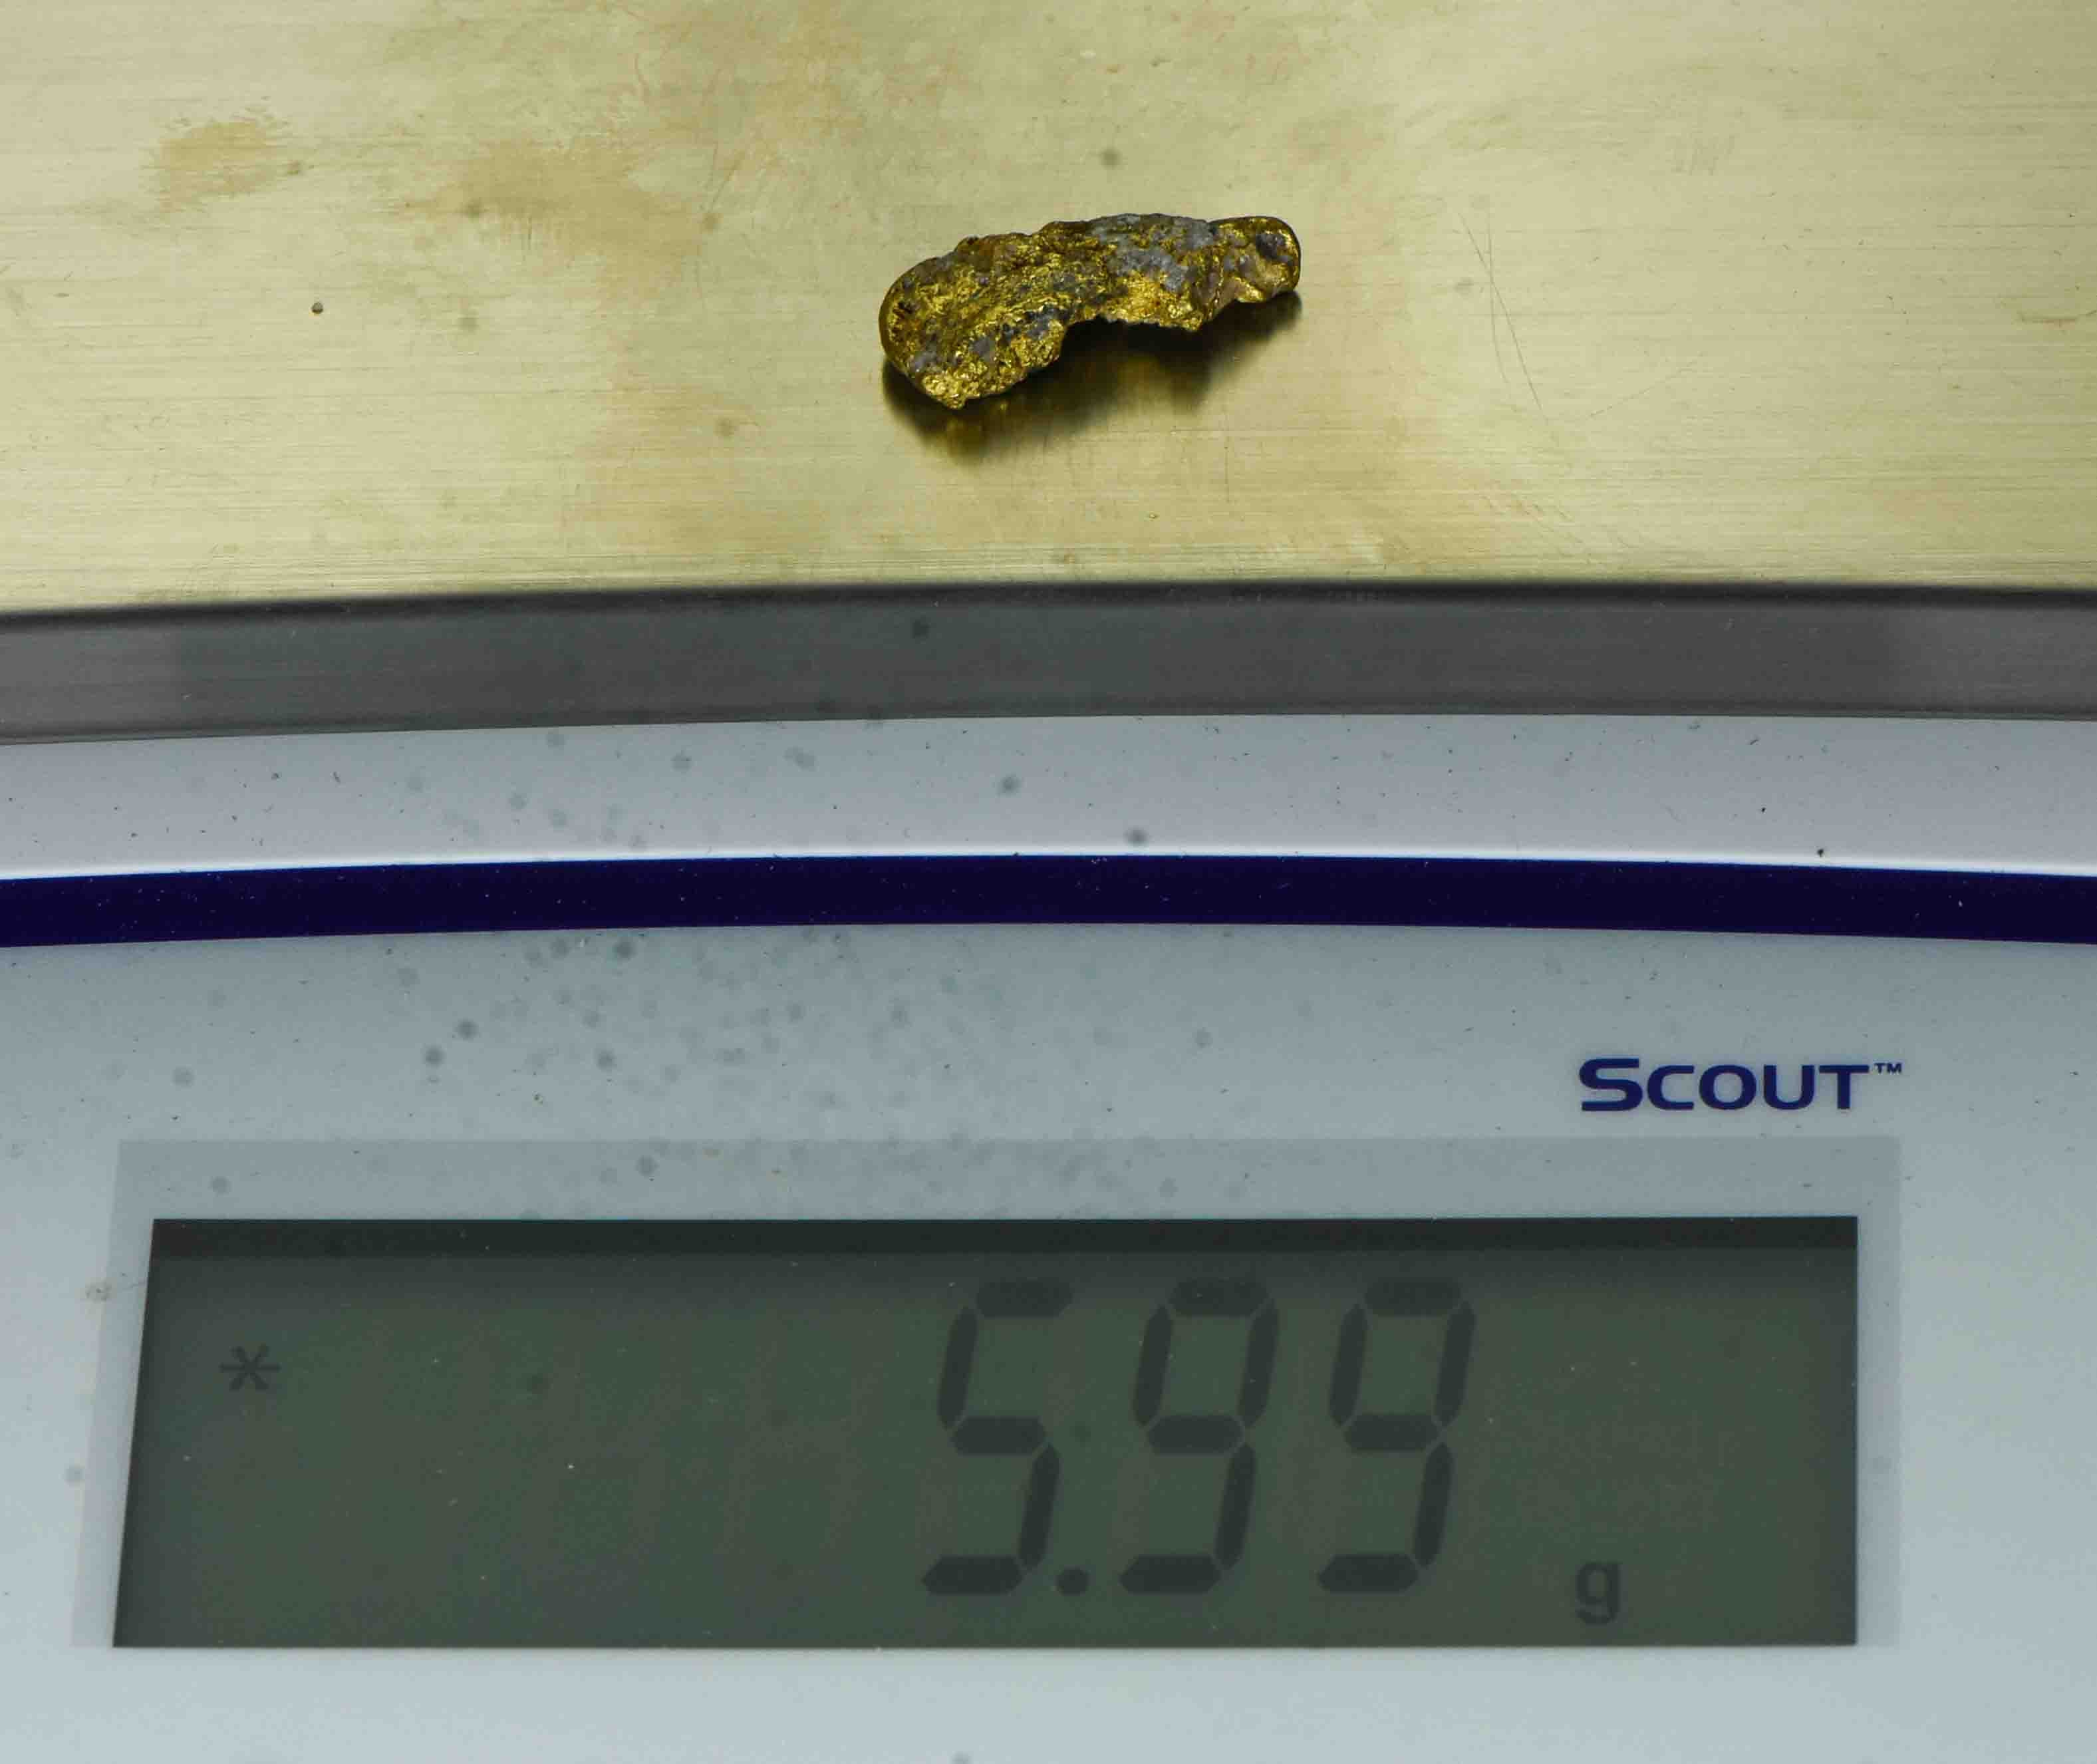 QN-49 "Alaskan BC Gold Nuggets with Quartz" Genuine 5.99 Grams